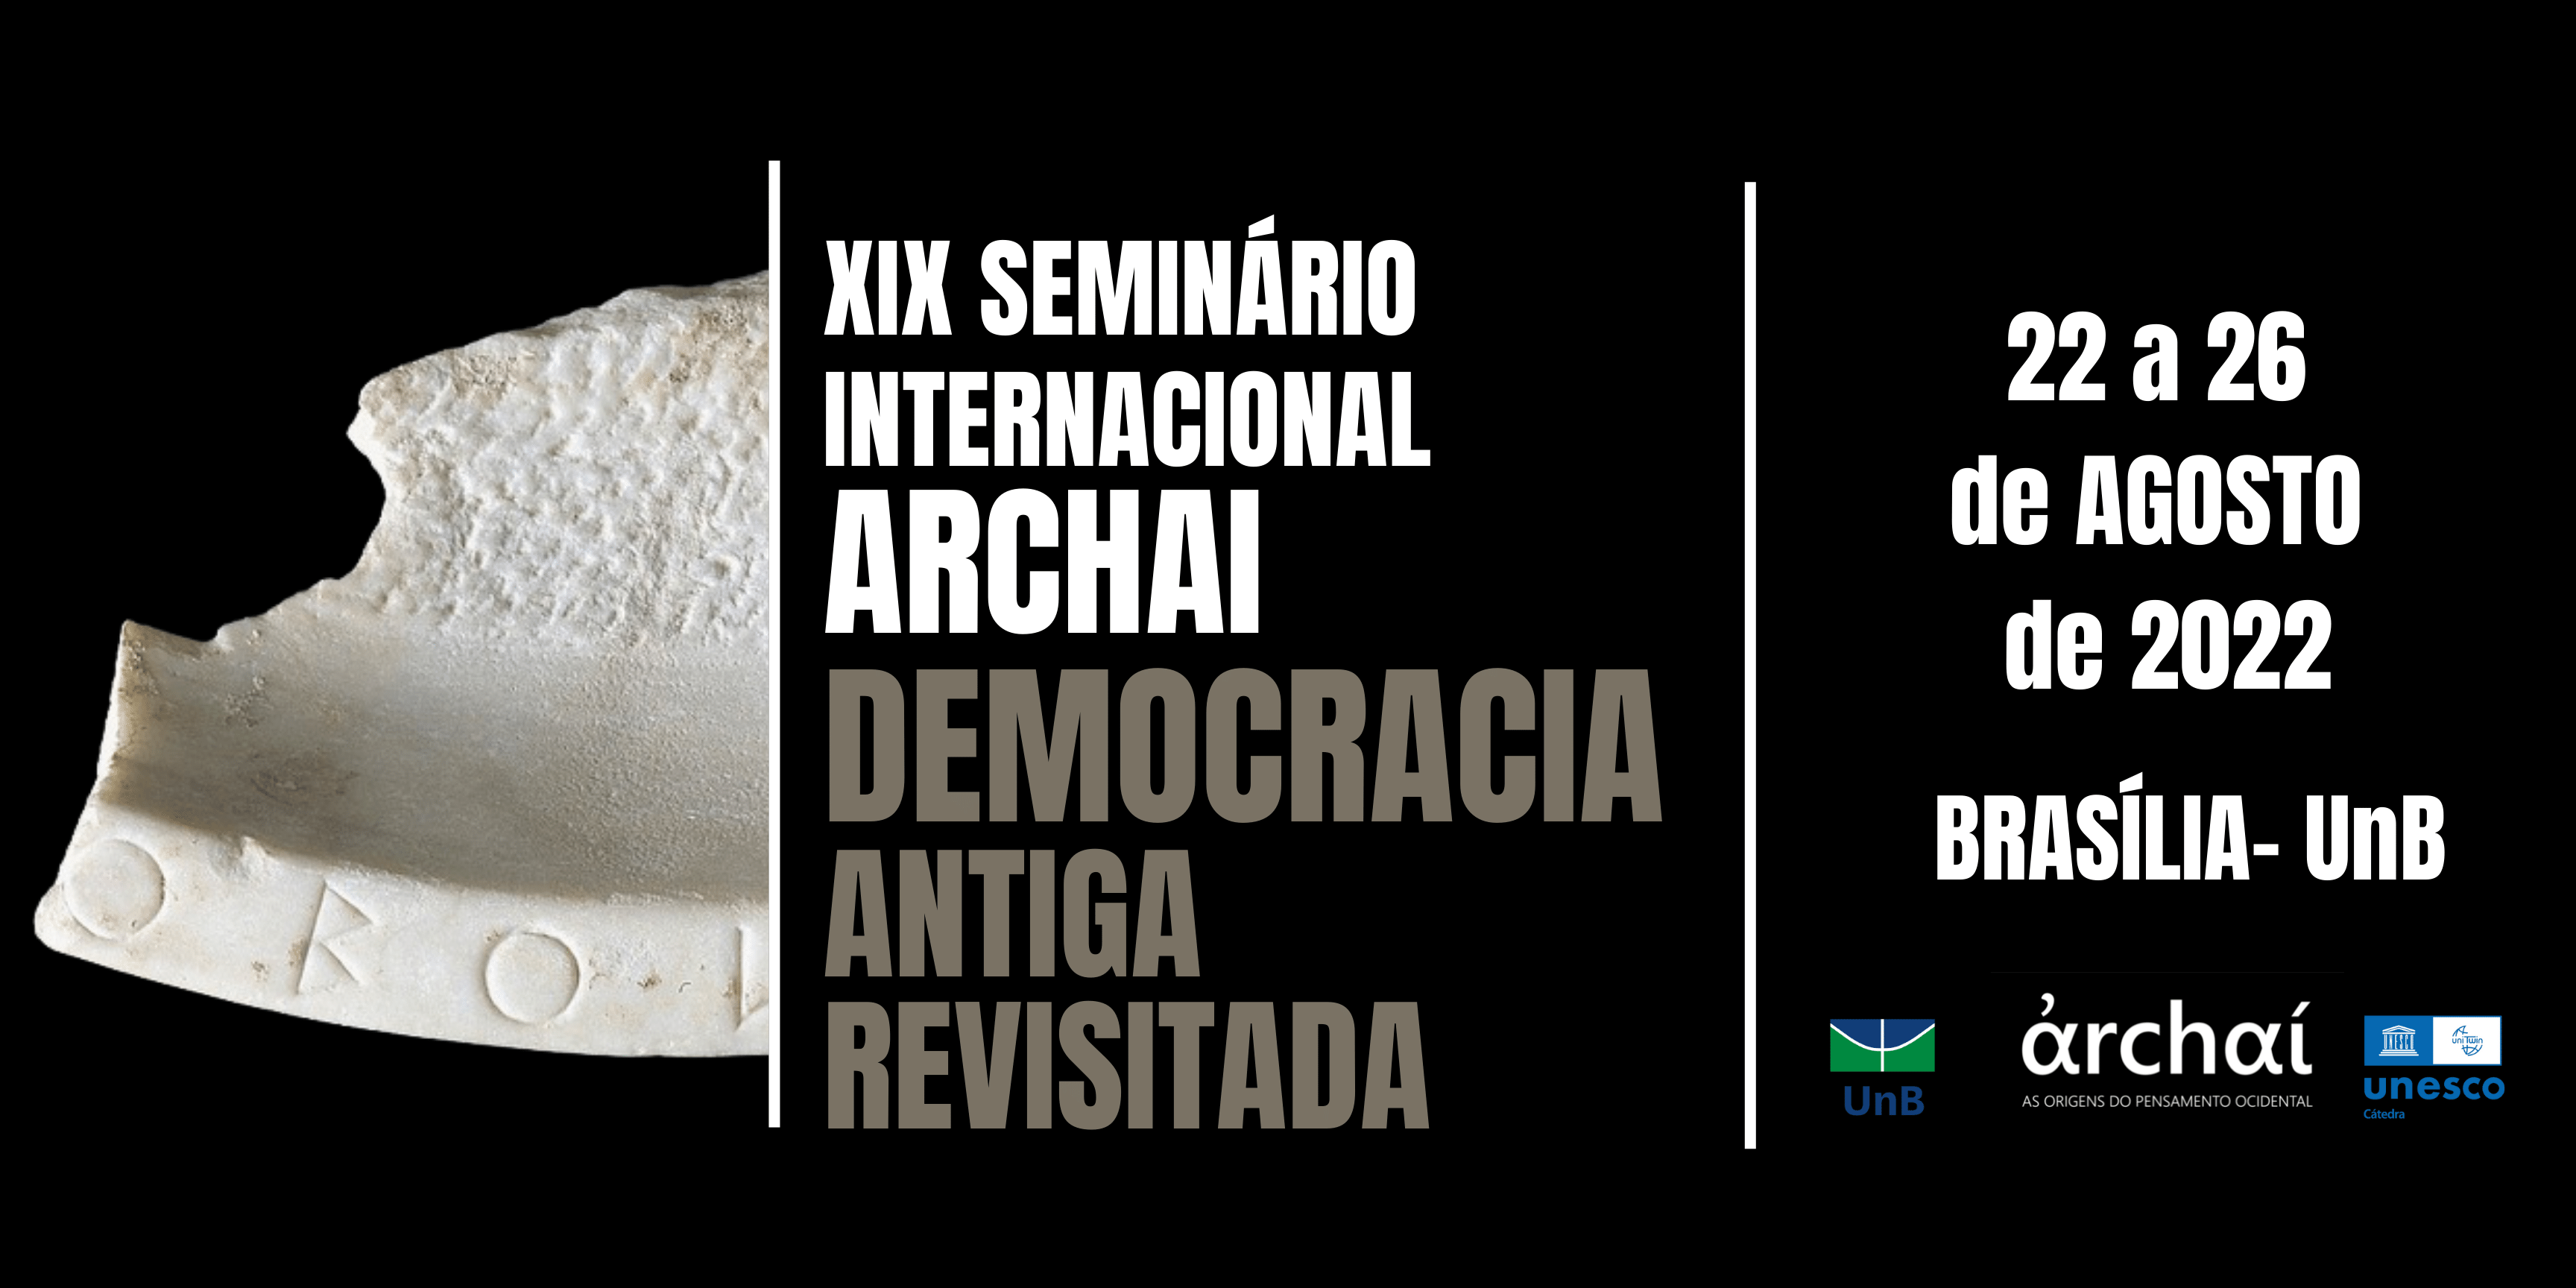 XIX Seminário Internacional Achai: Democracia Antiga Revisitada